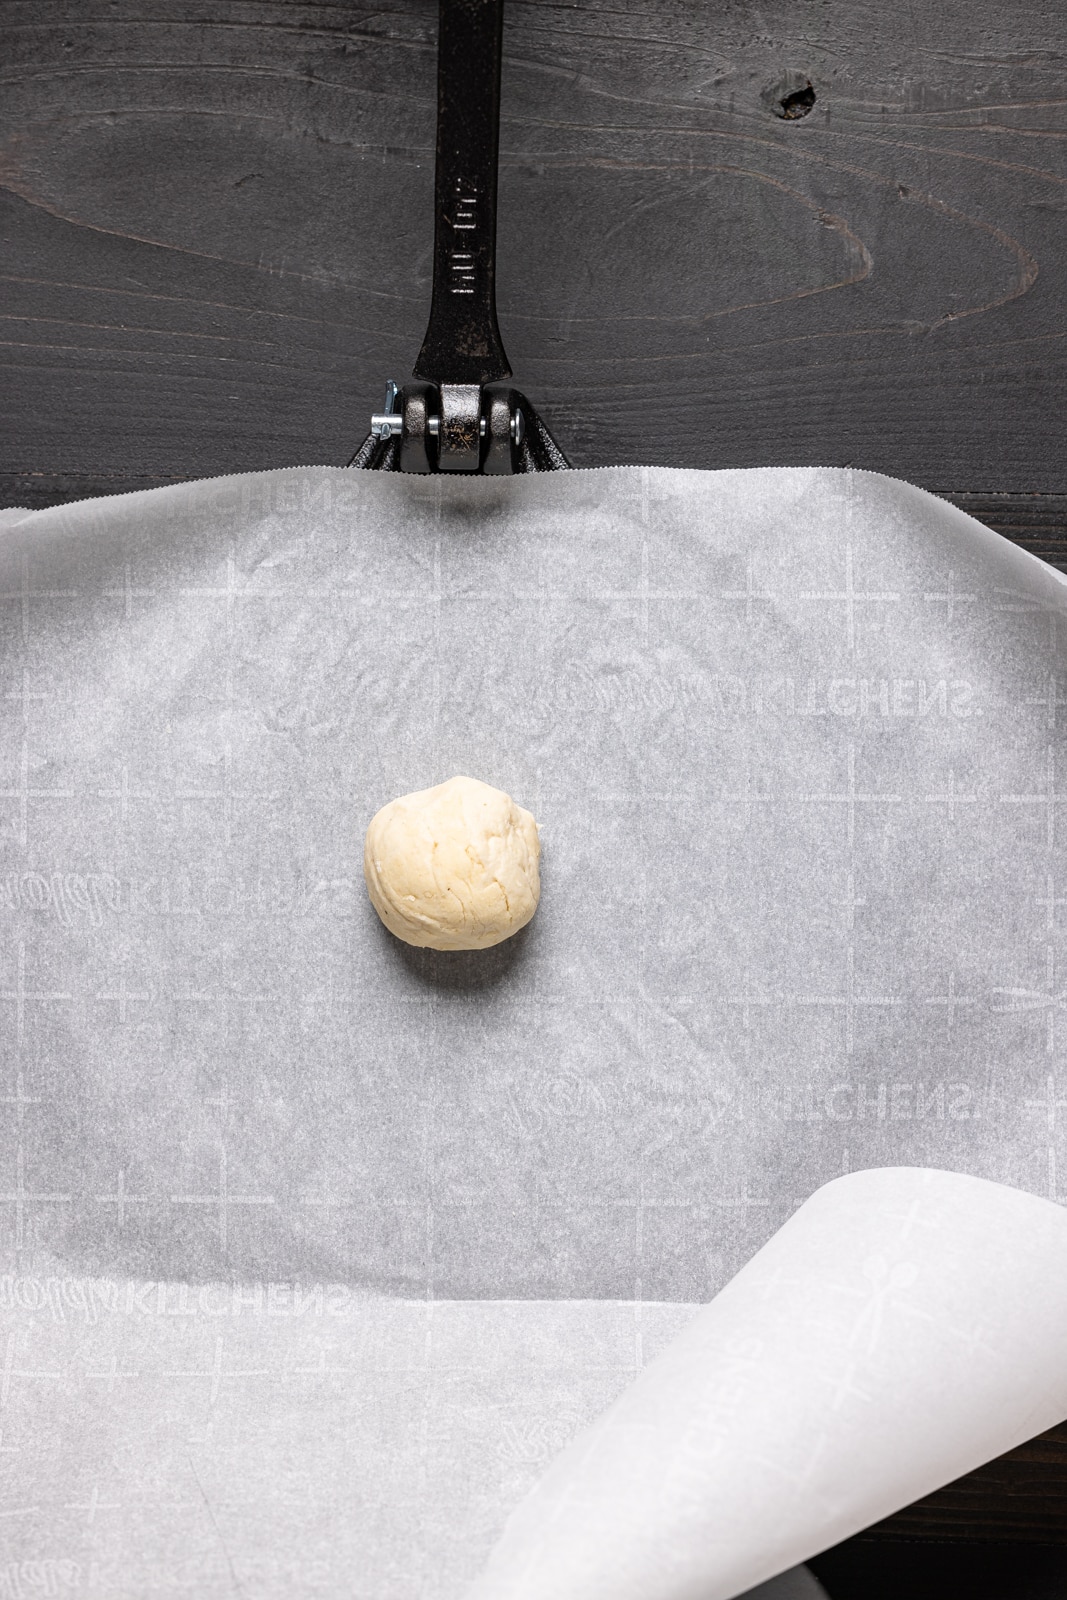 Flour dough ball on a parchment paper on a tortilla press.